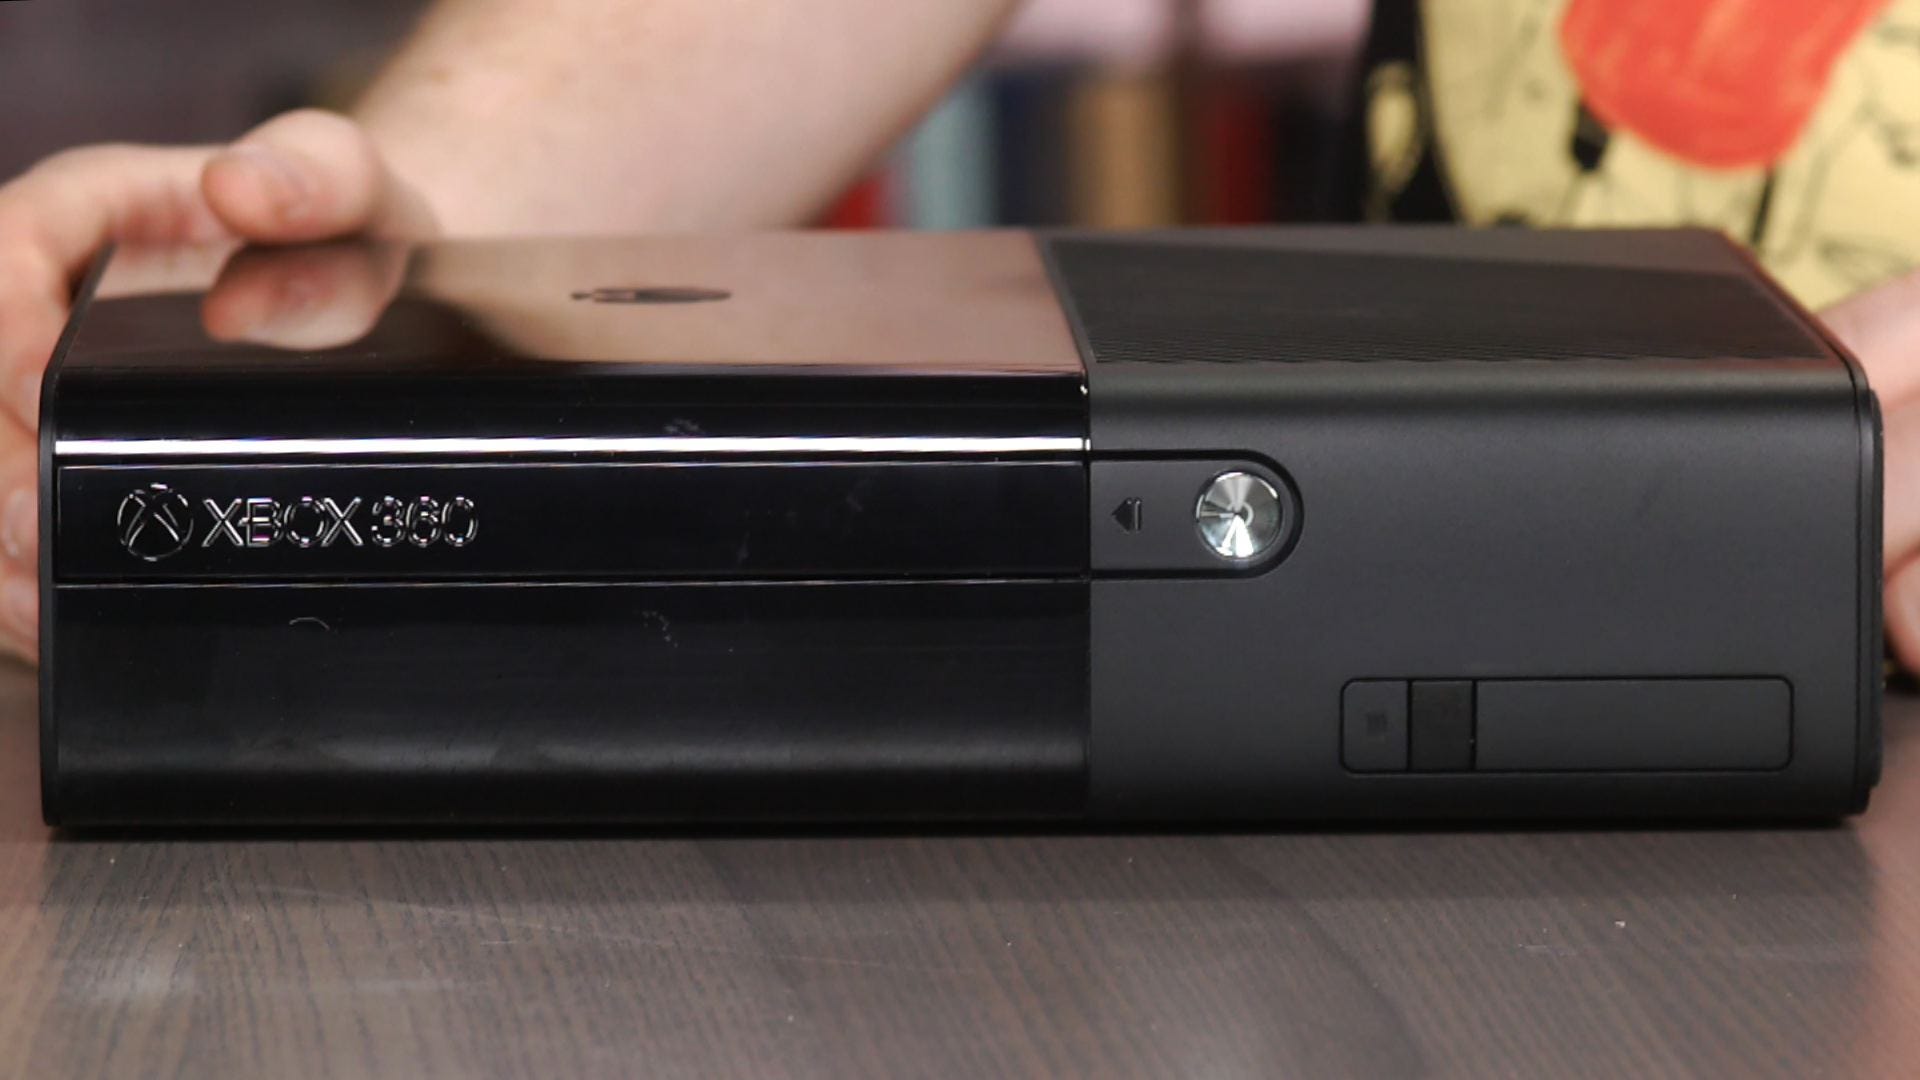 Хбокс 360 е. Xbox 360 e USB. Xbox 360 vs Xbox 360 e. Xbox 360 e разъемы. Xbox 360 e красный индикатор.